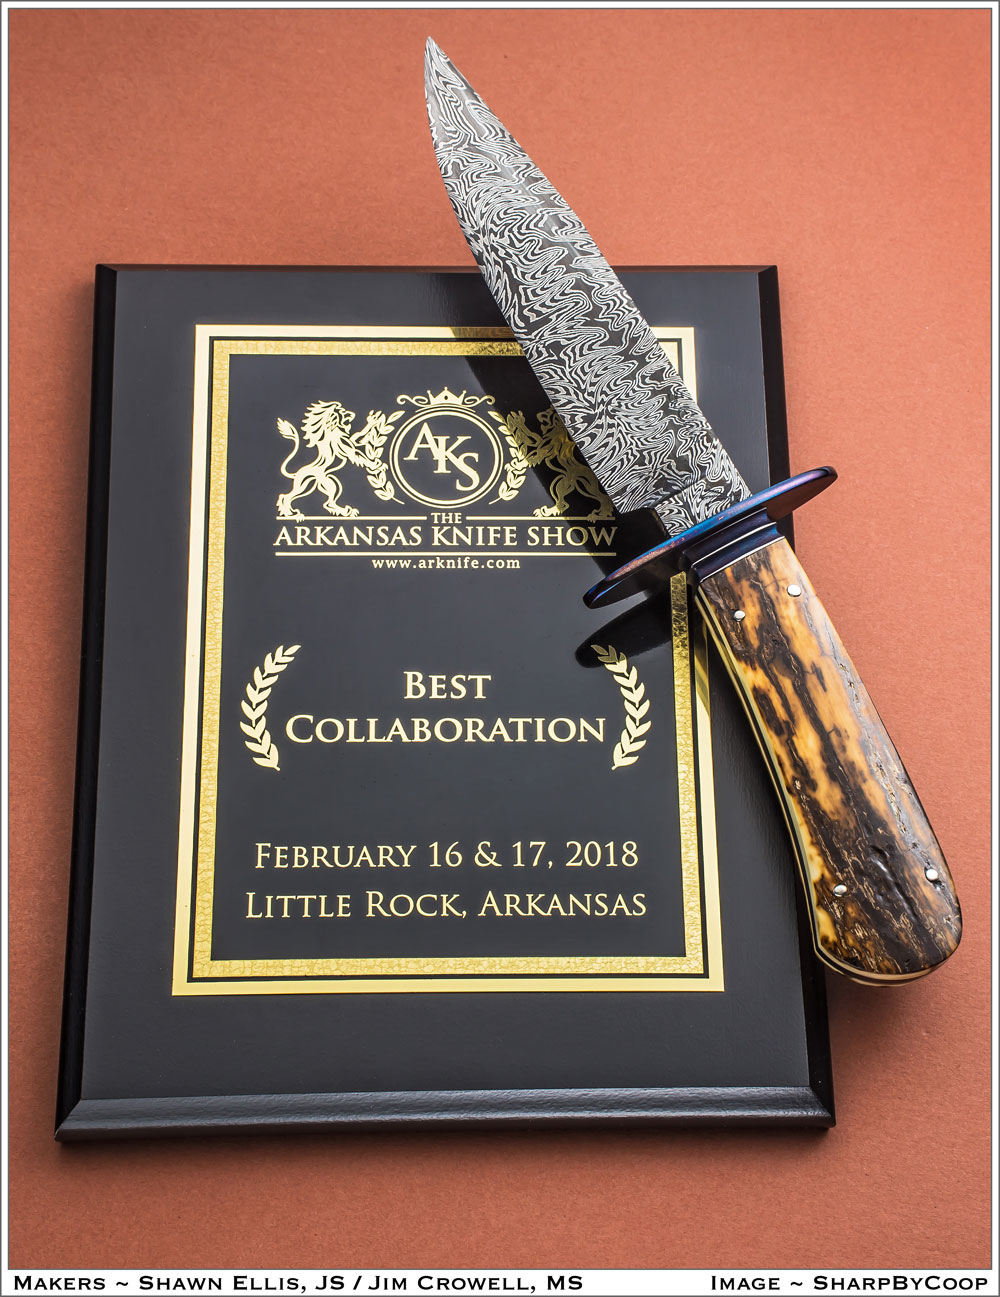 Arkansas Knife Show 2018 award winners